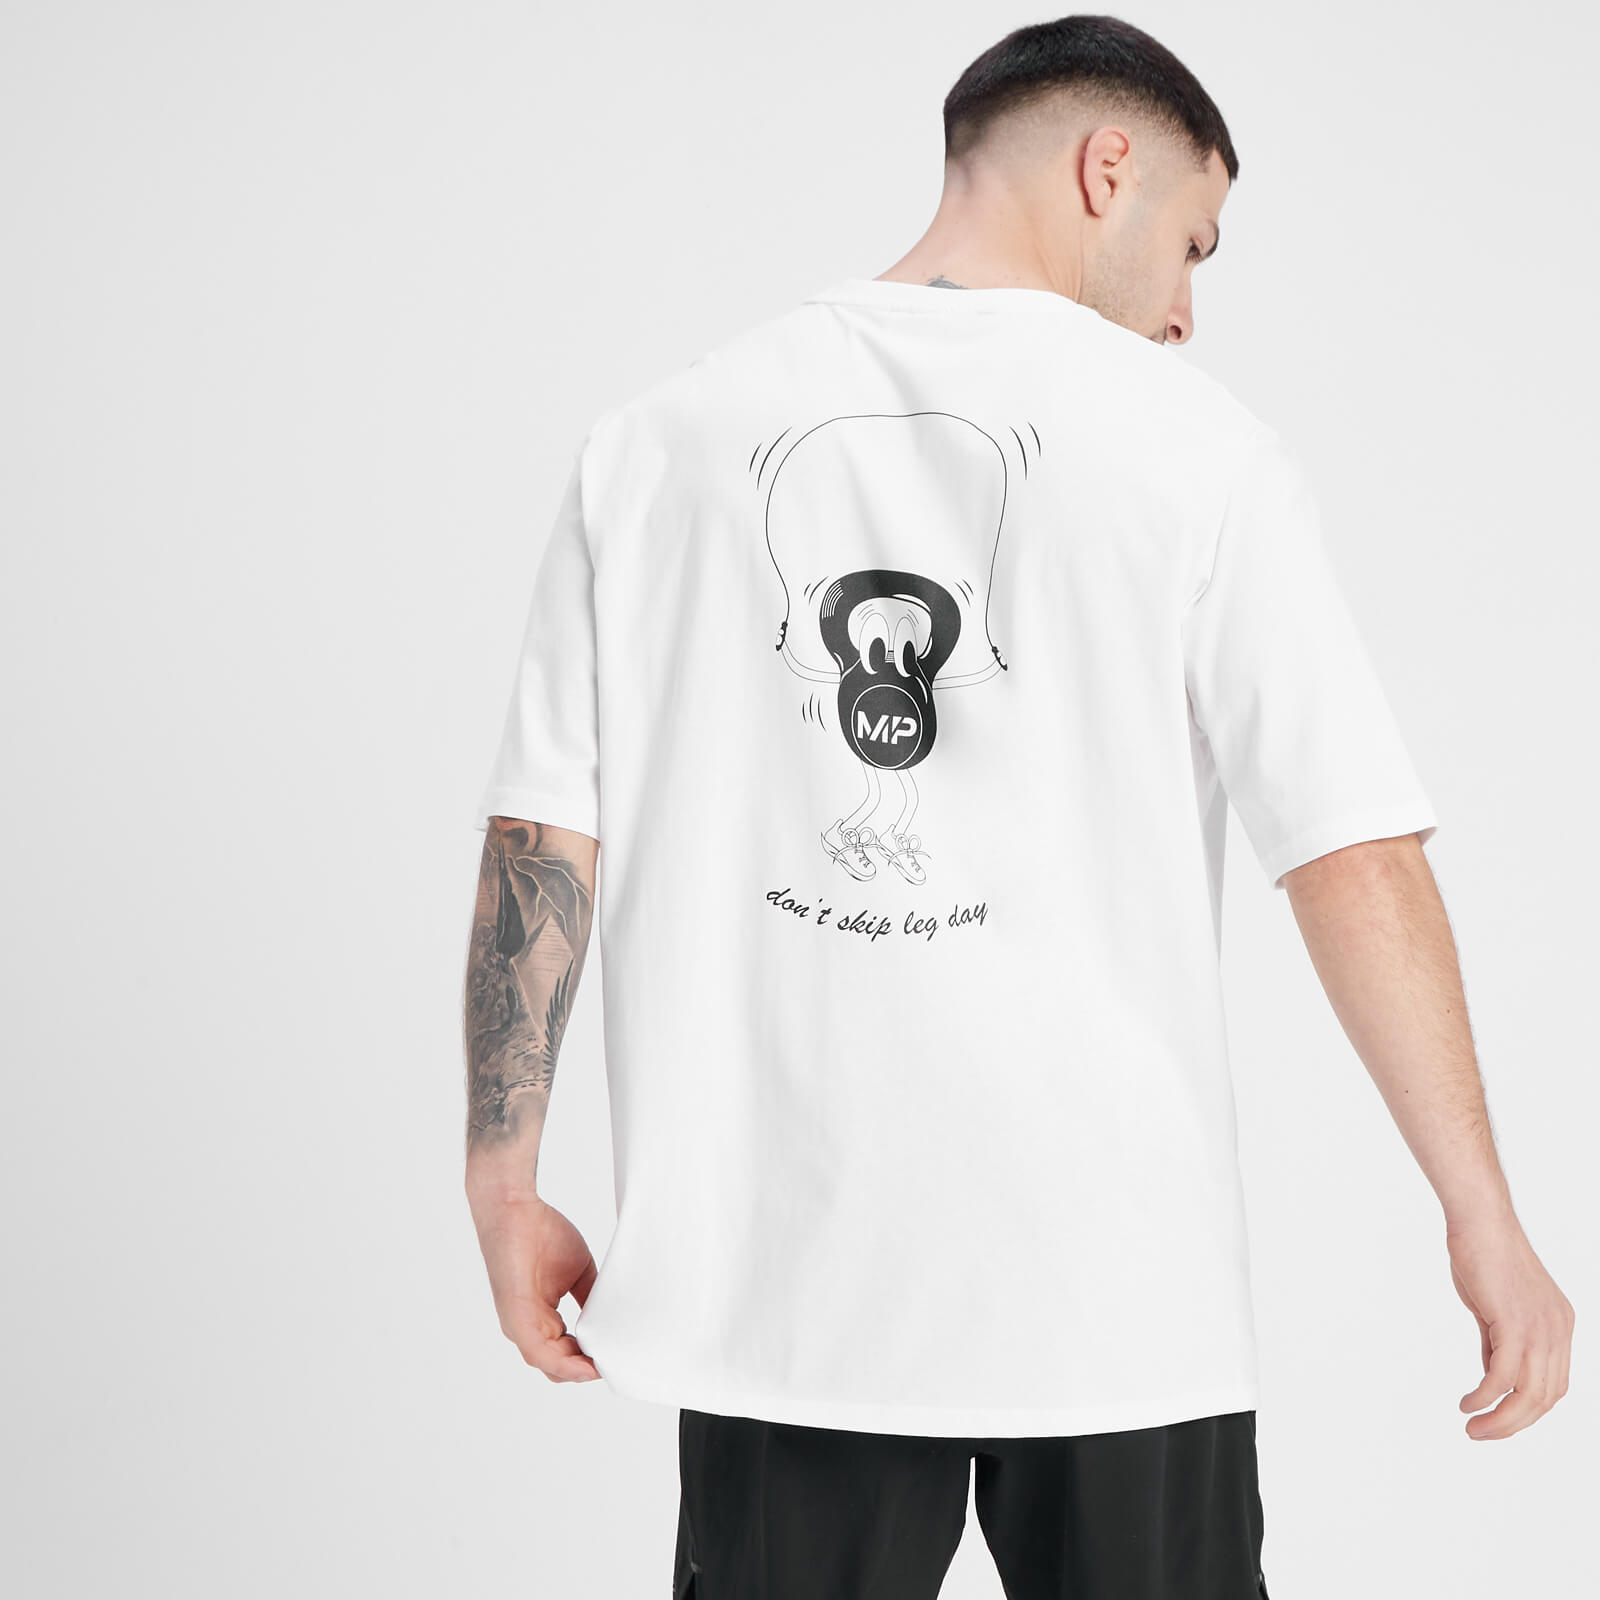 T-shirt Oversize Grit Graphic da MP para Homem - Branco